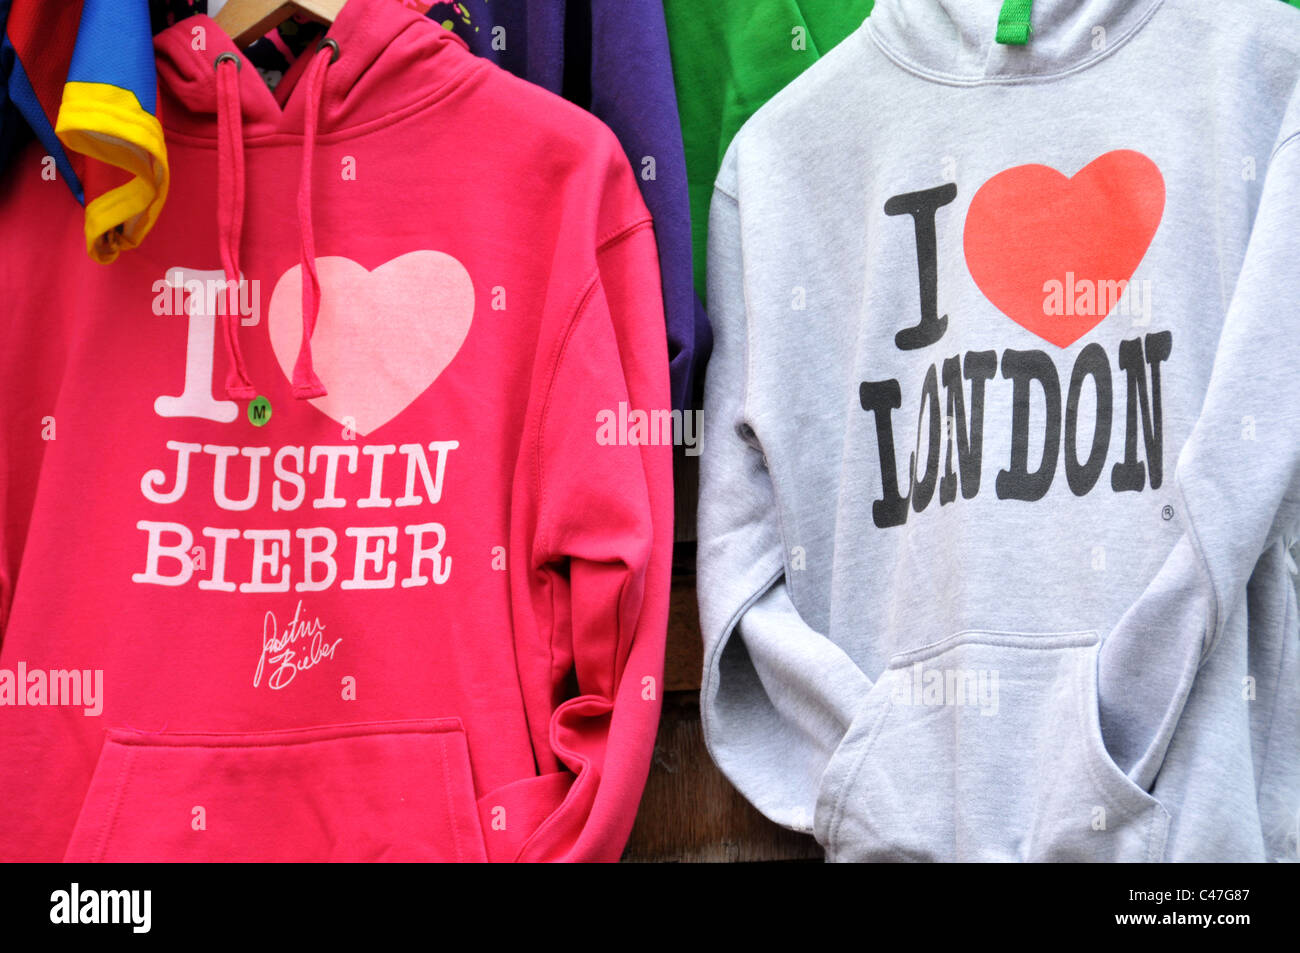 Justin Bieber London 'I Love London' hooded tops tourist gifts London market stall Stock Photo